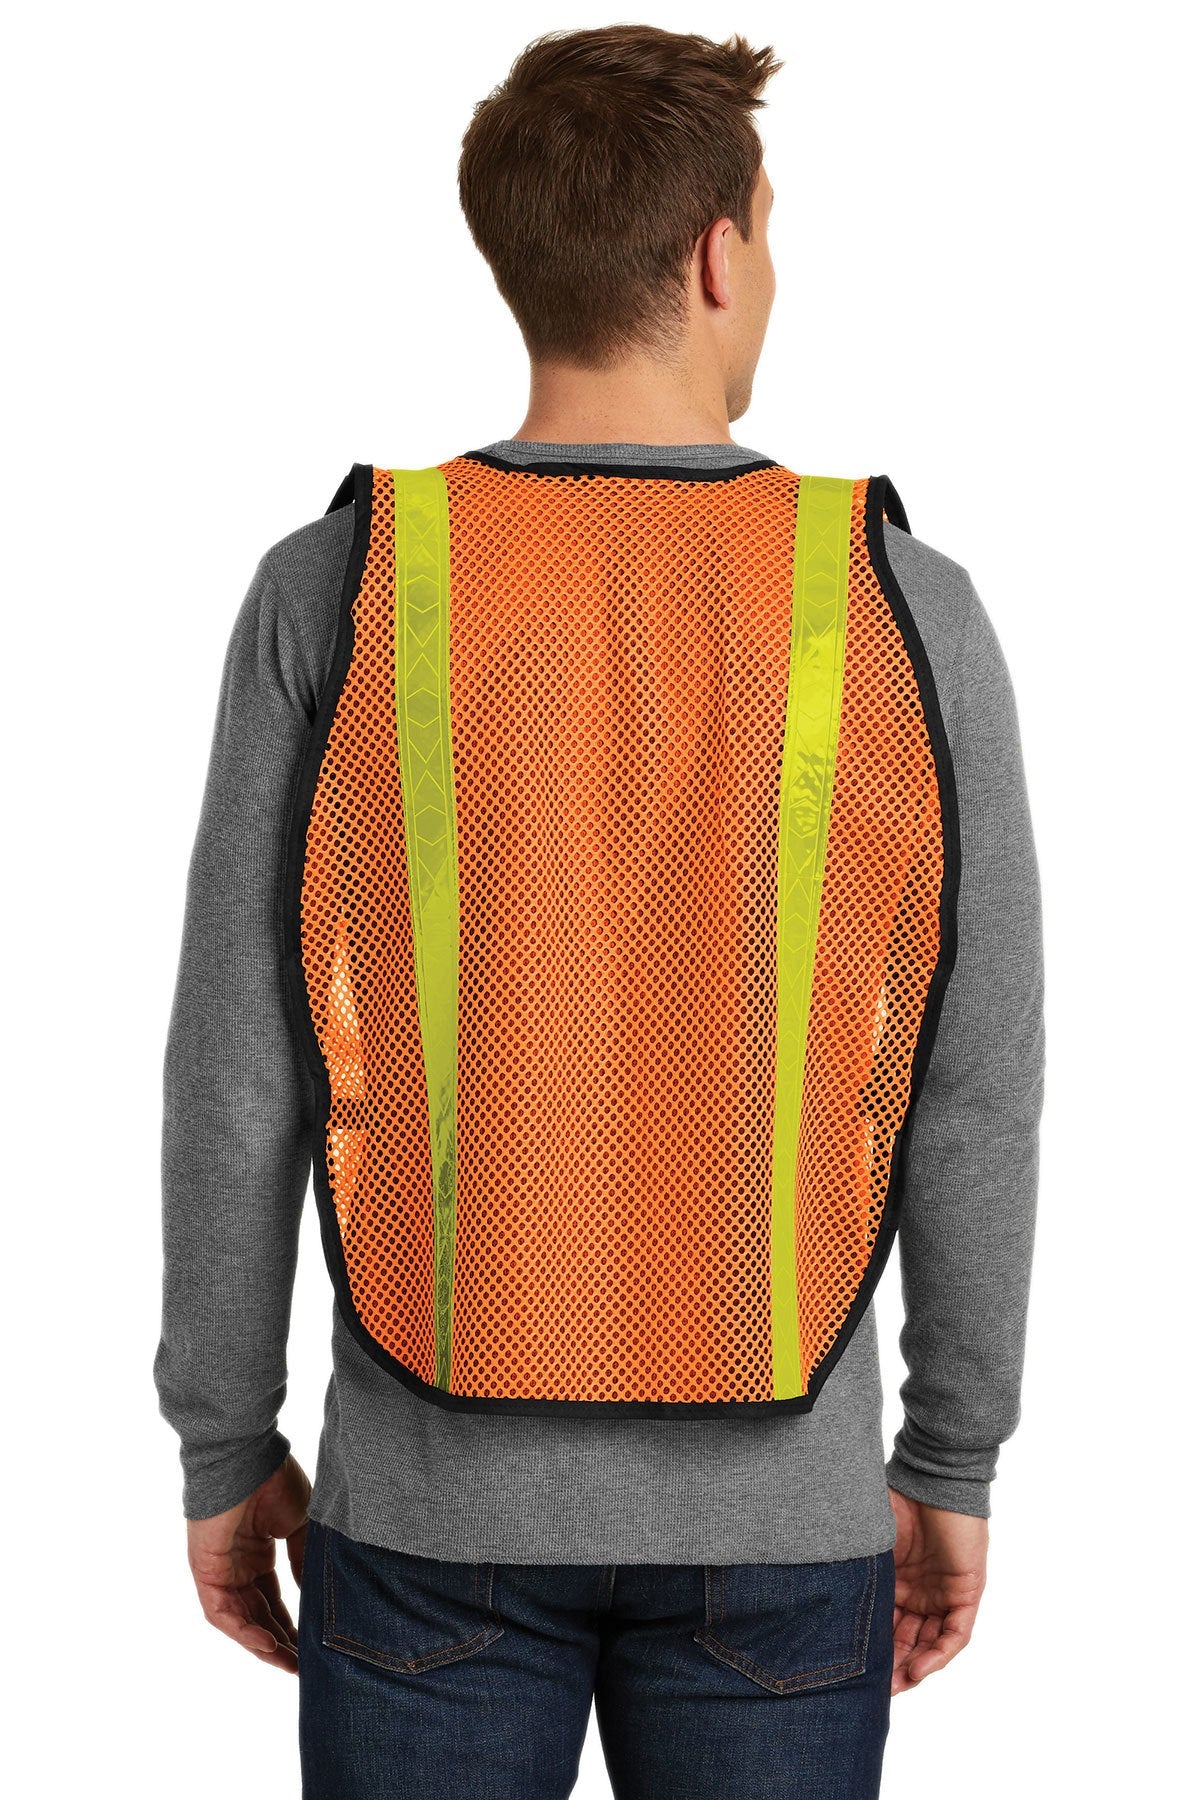 Port Authority Mesh Enhanced Visibility Vest SV02 Safety Orange